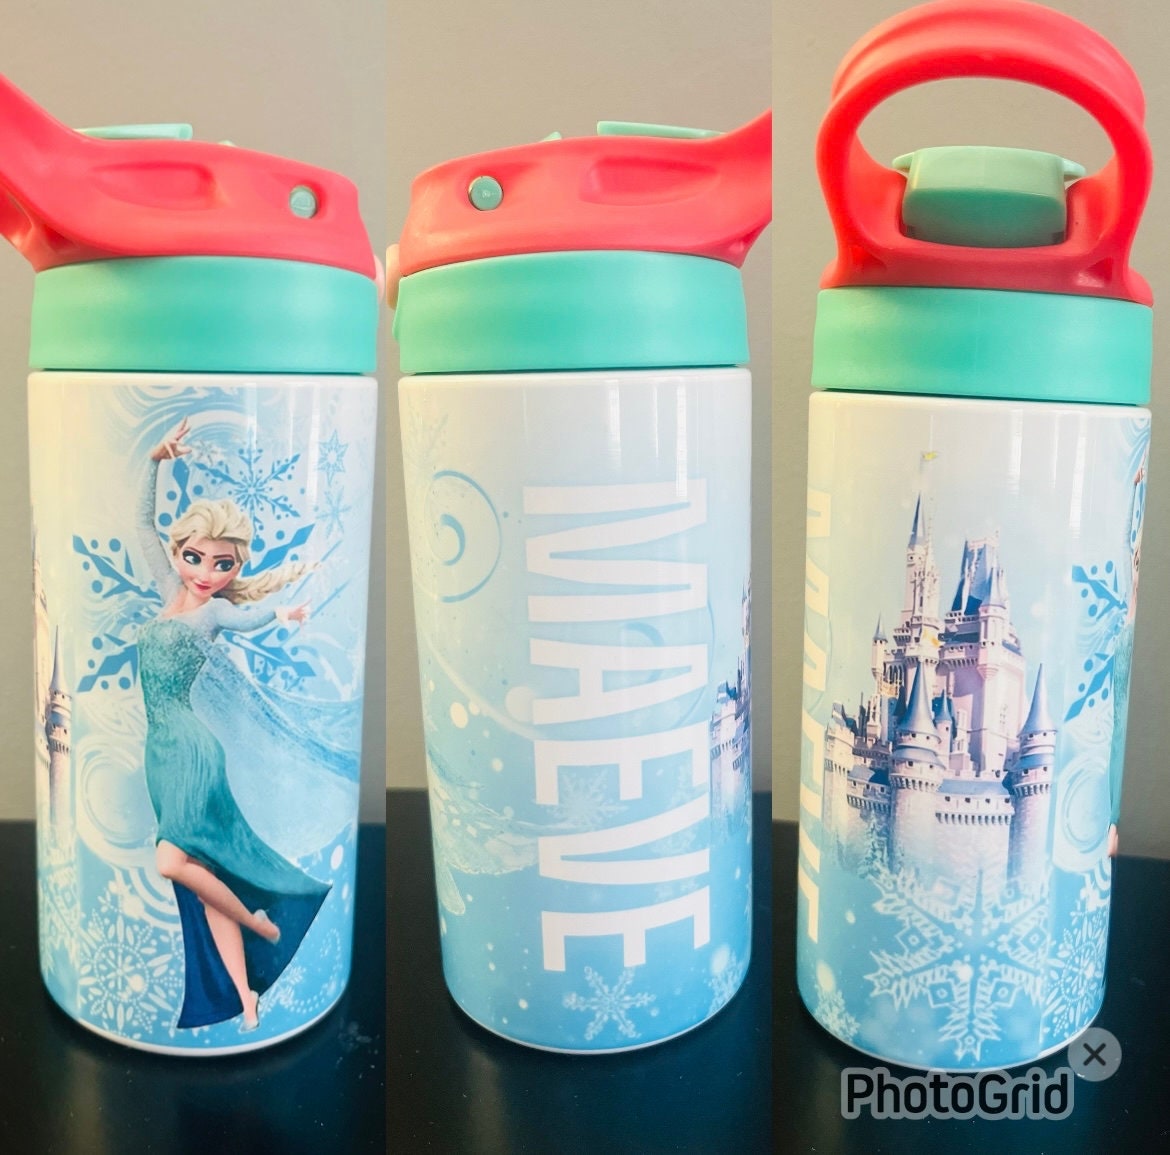 Zak Designs Disney Frozen 14 Oz. Water Bottle, Anna, Elsa and Olaf 